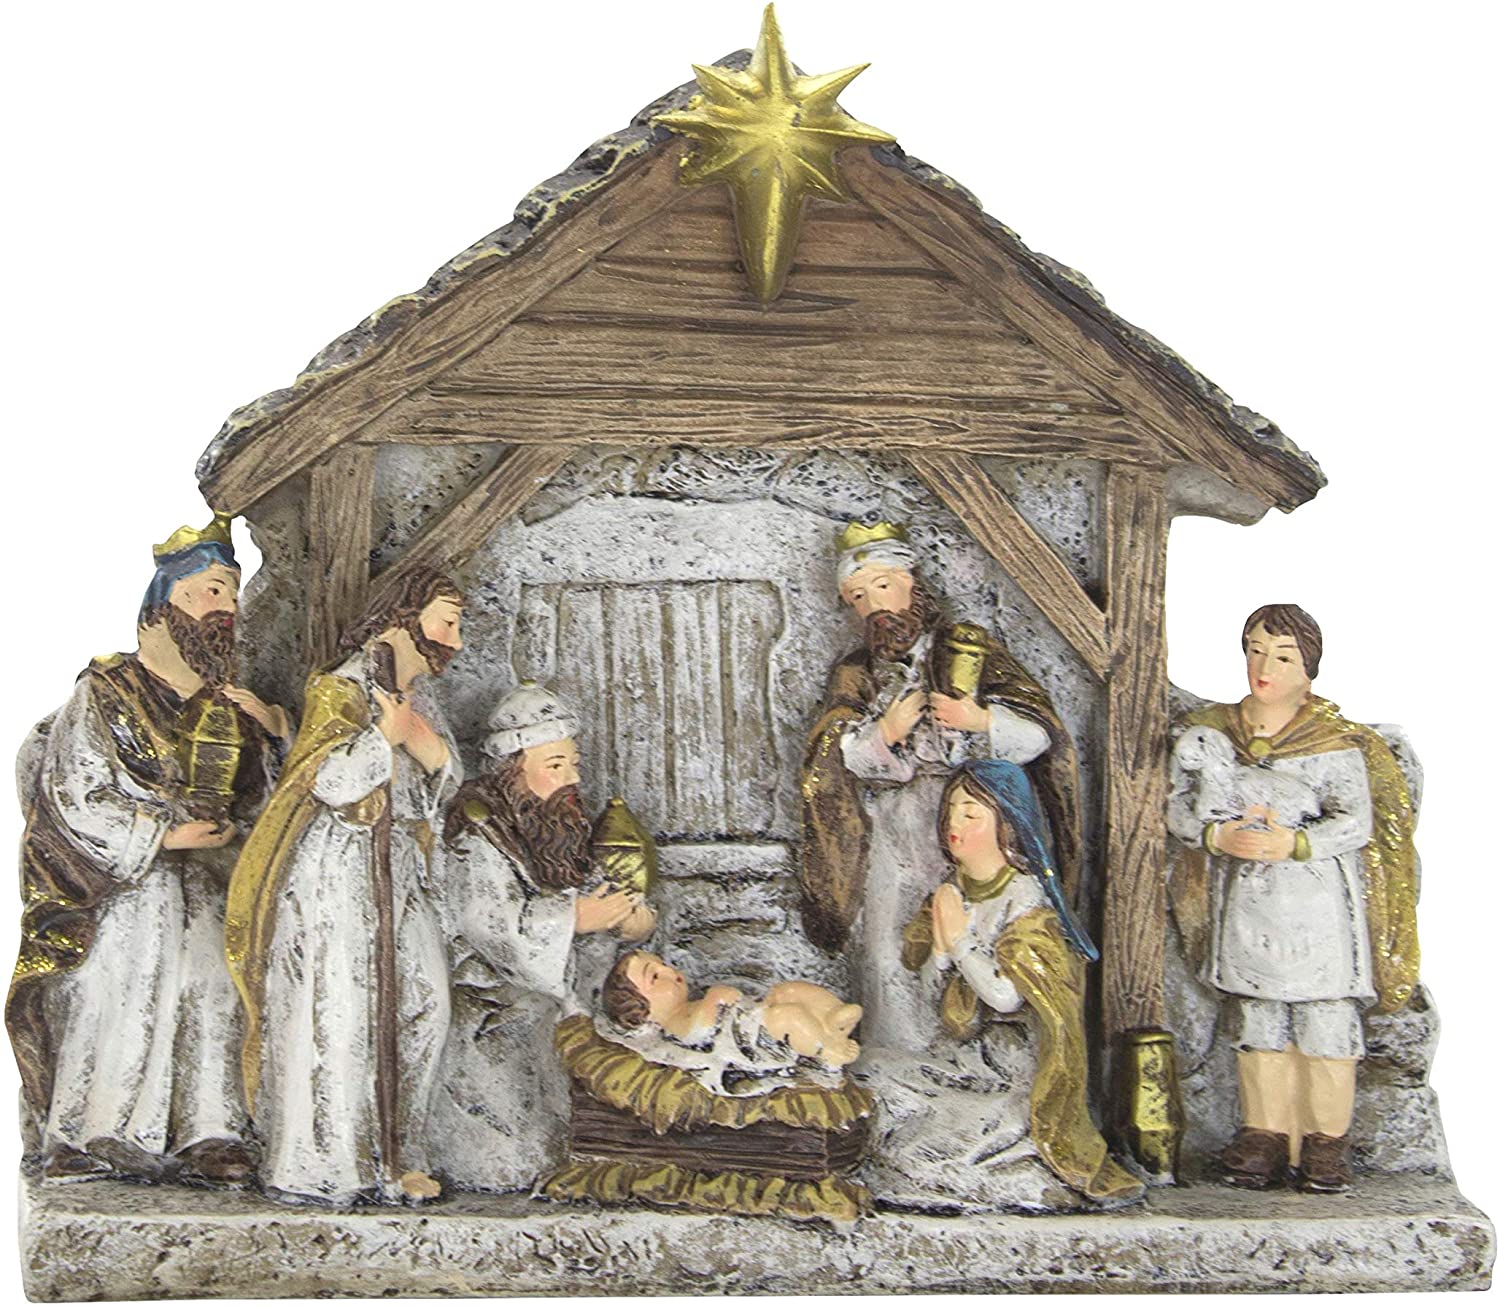 DARO DEKO Decorative Christmas Nativity Scene 19.5 x 17 cm Made of Artificial Stone